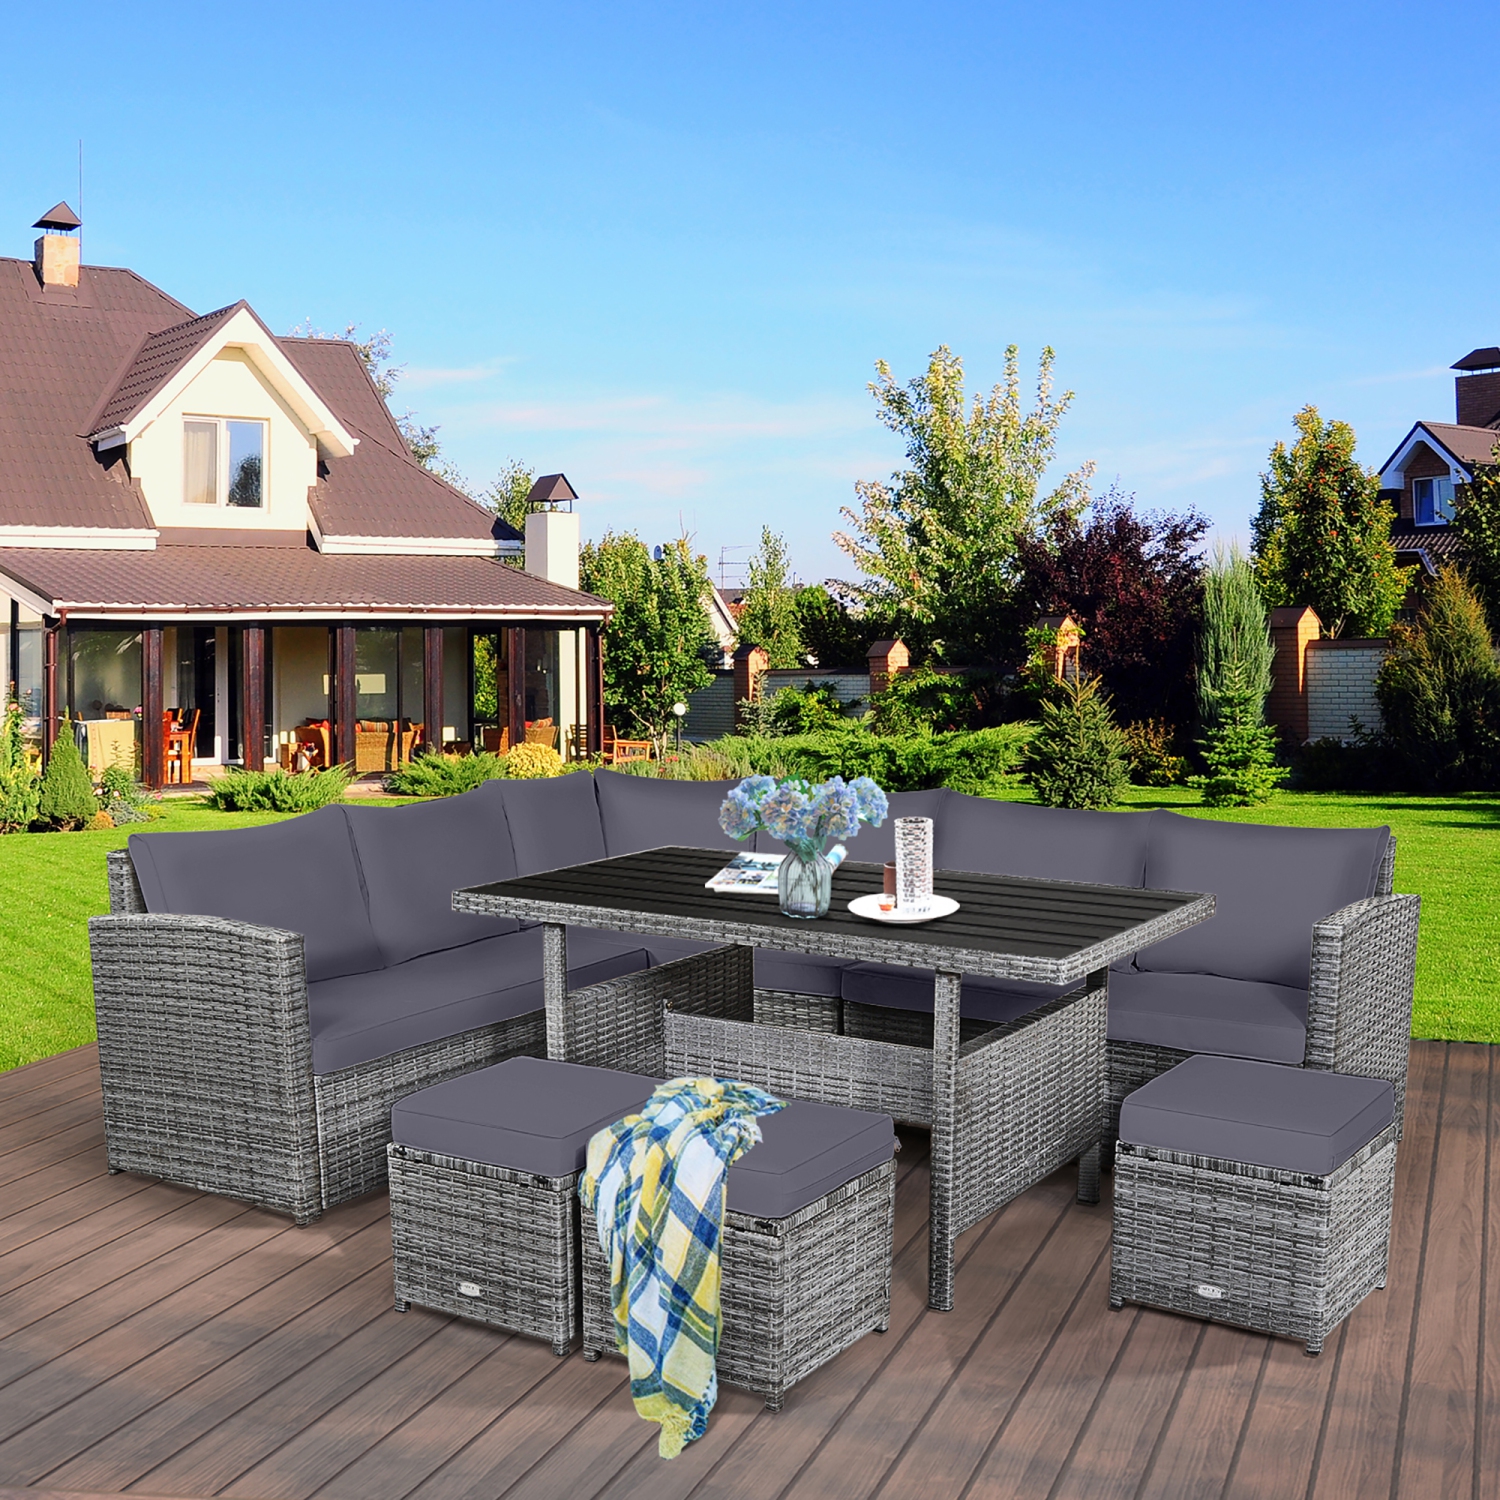 resin outdoor furniture on a garden deck